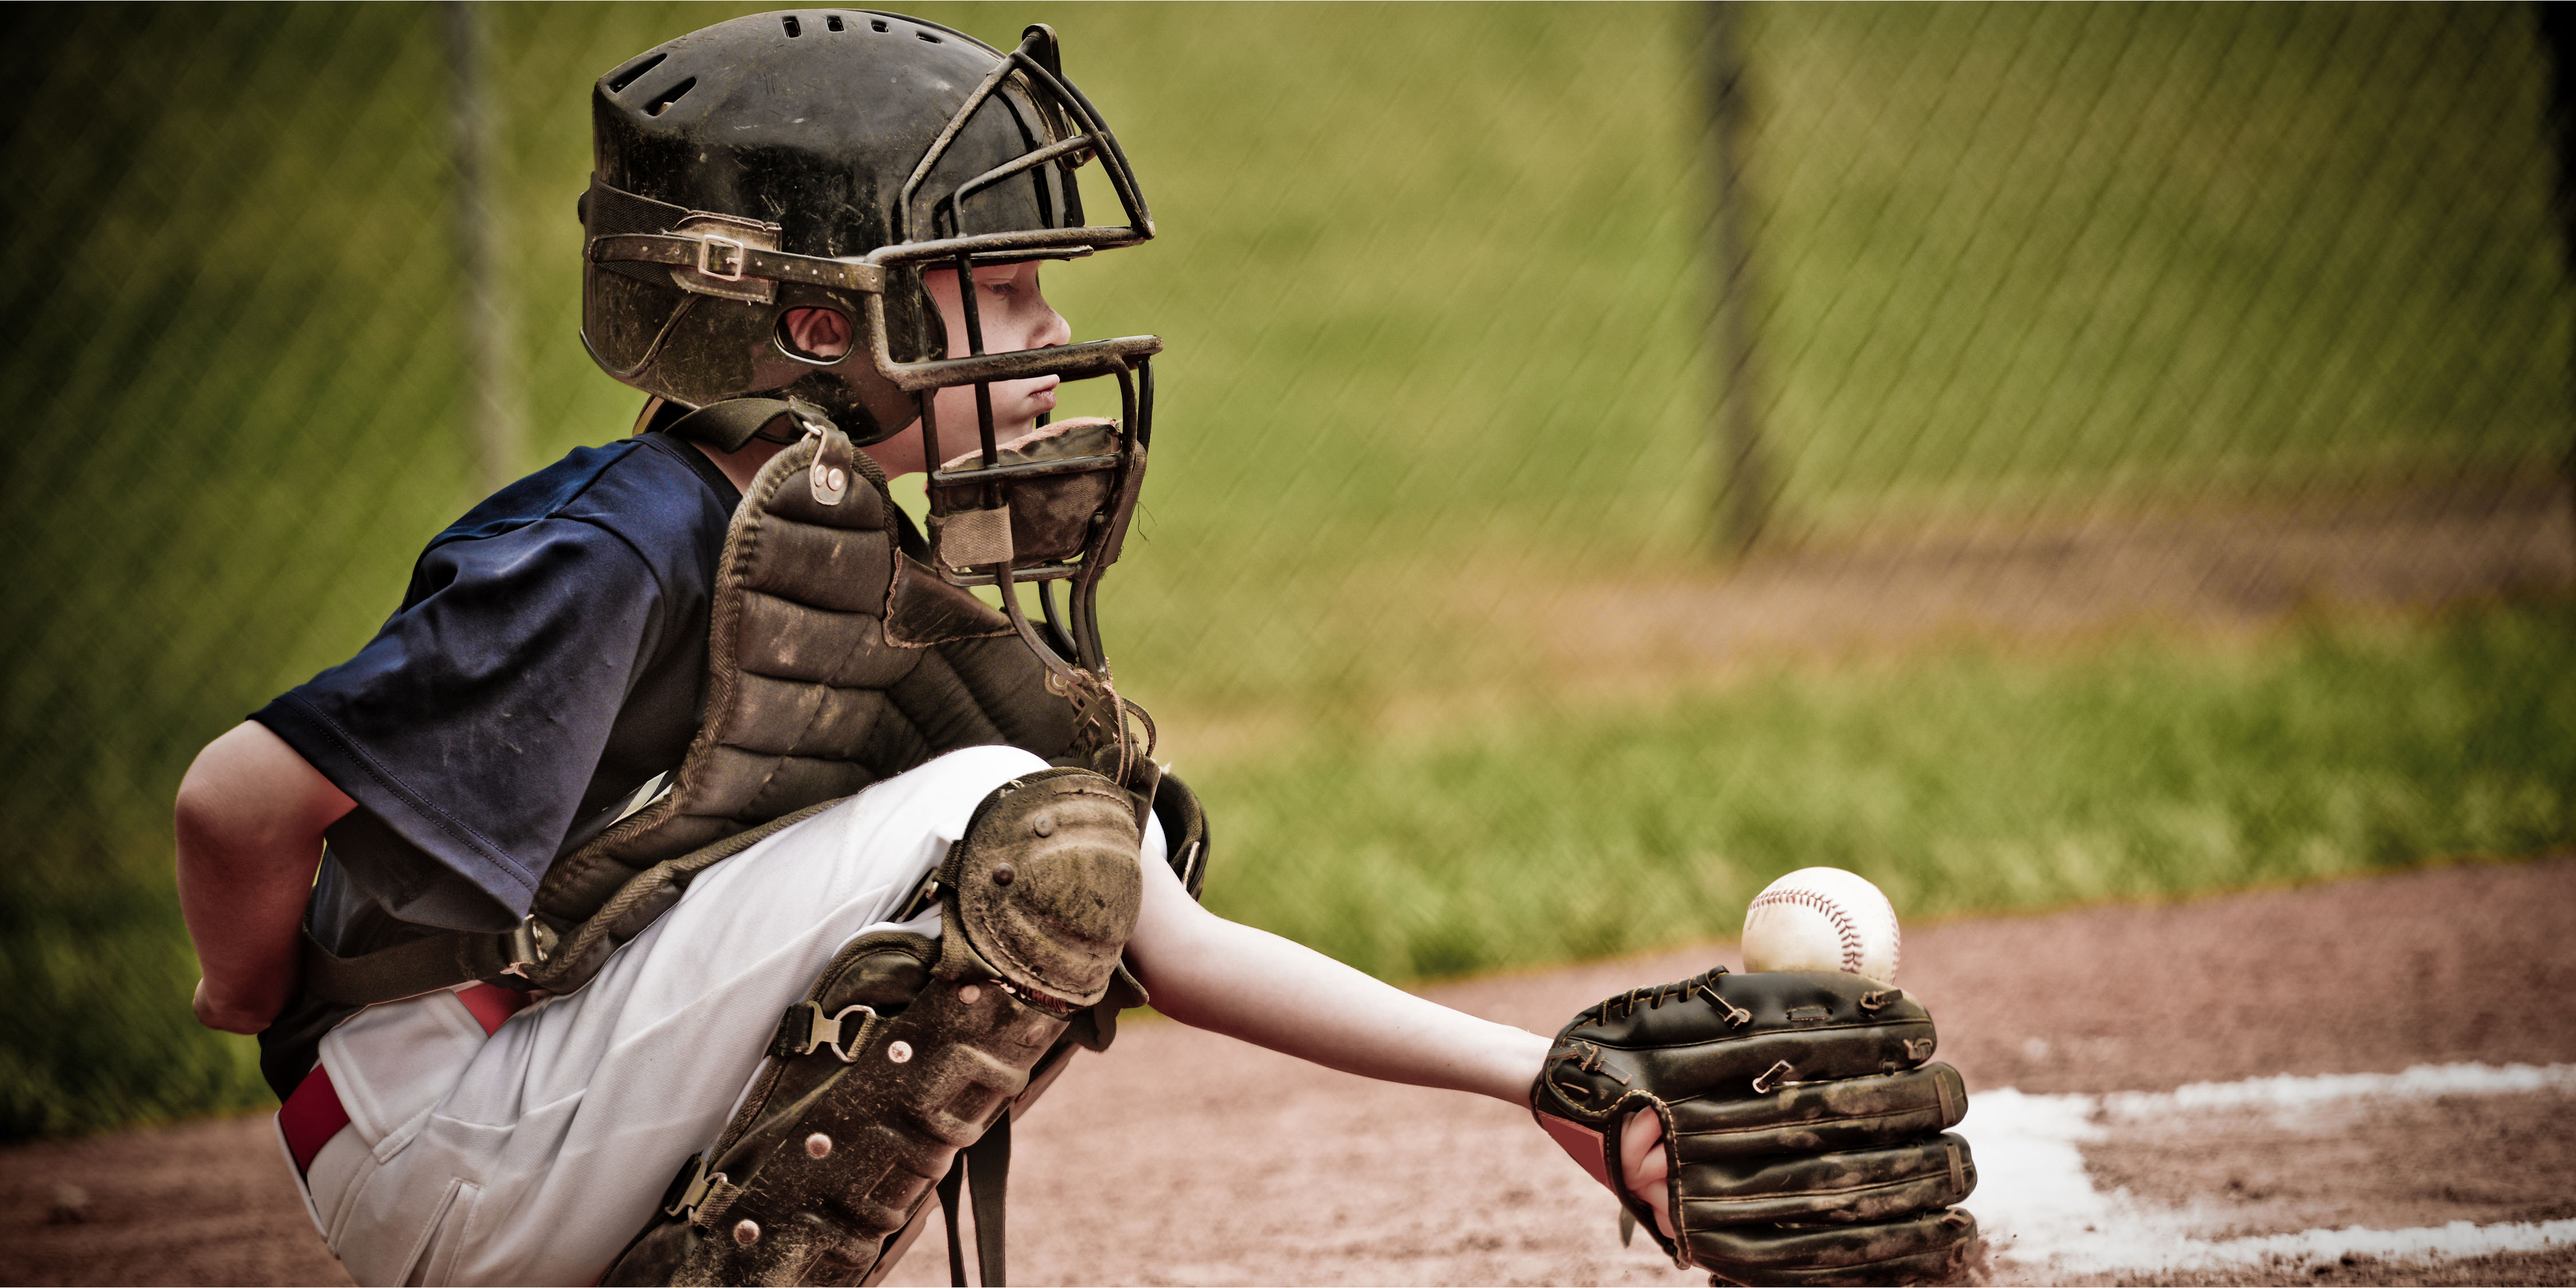 Boy playing baseball. | Source: Shutterstock